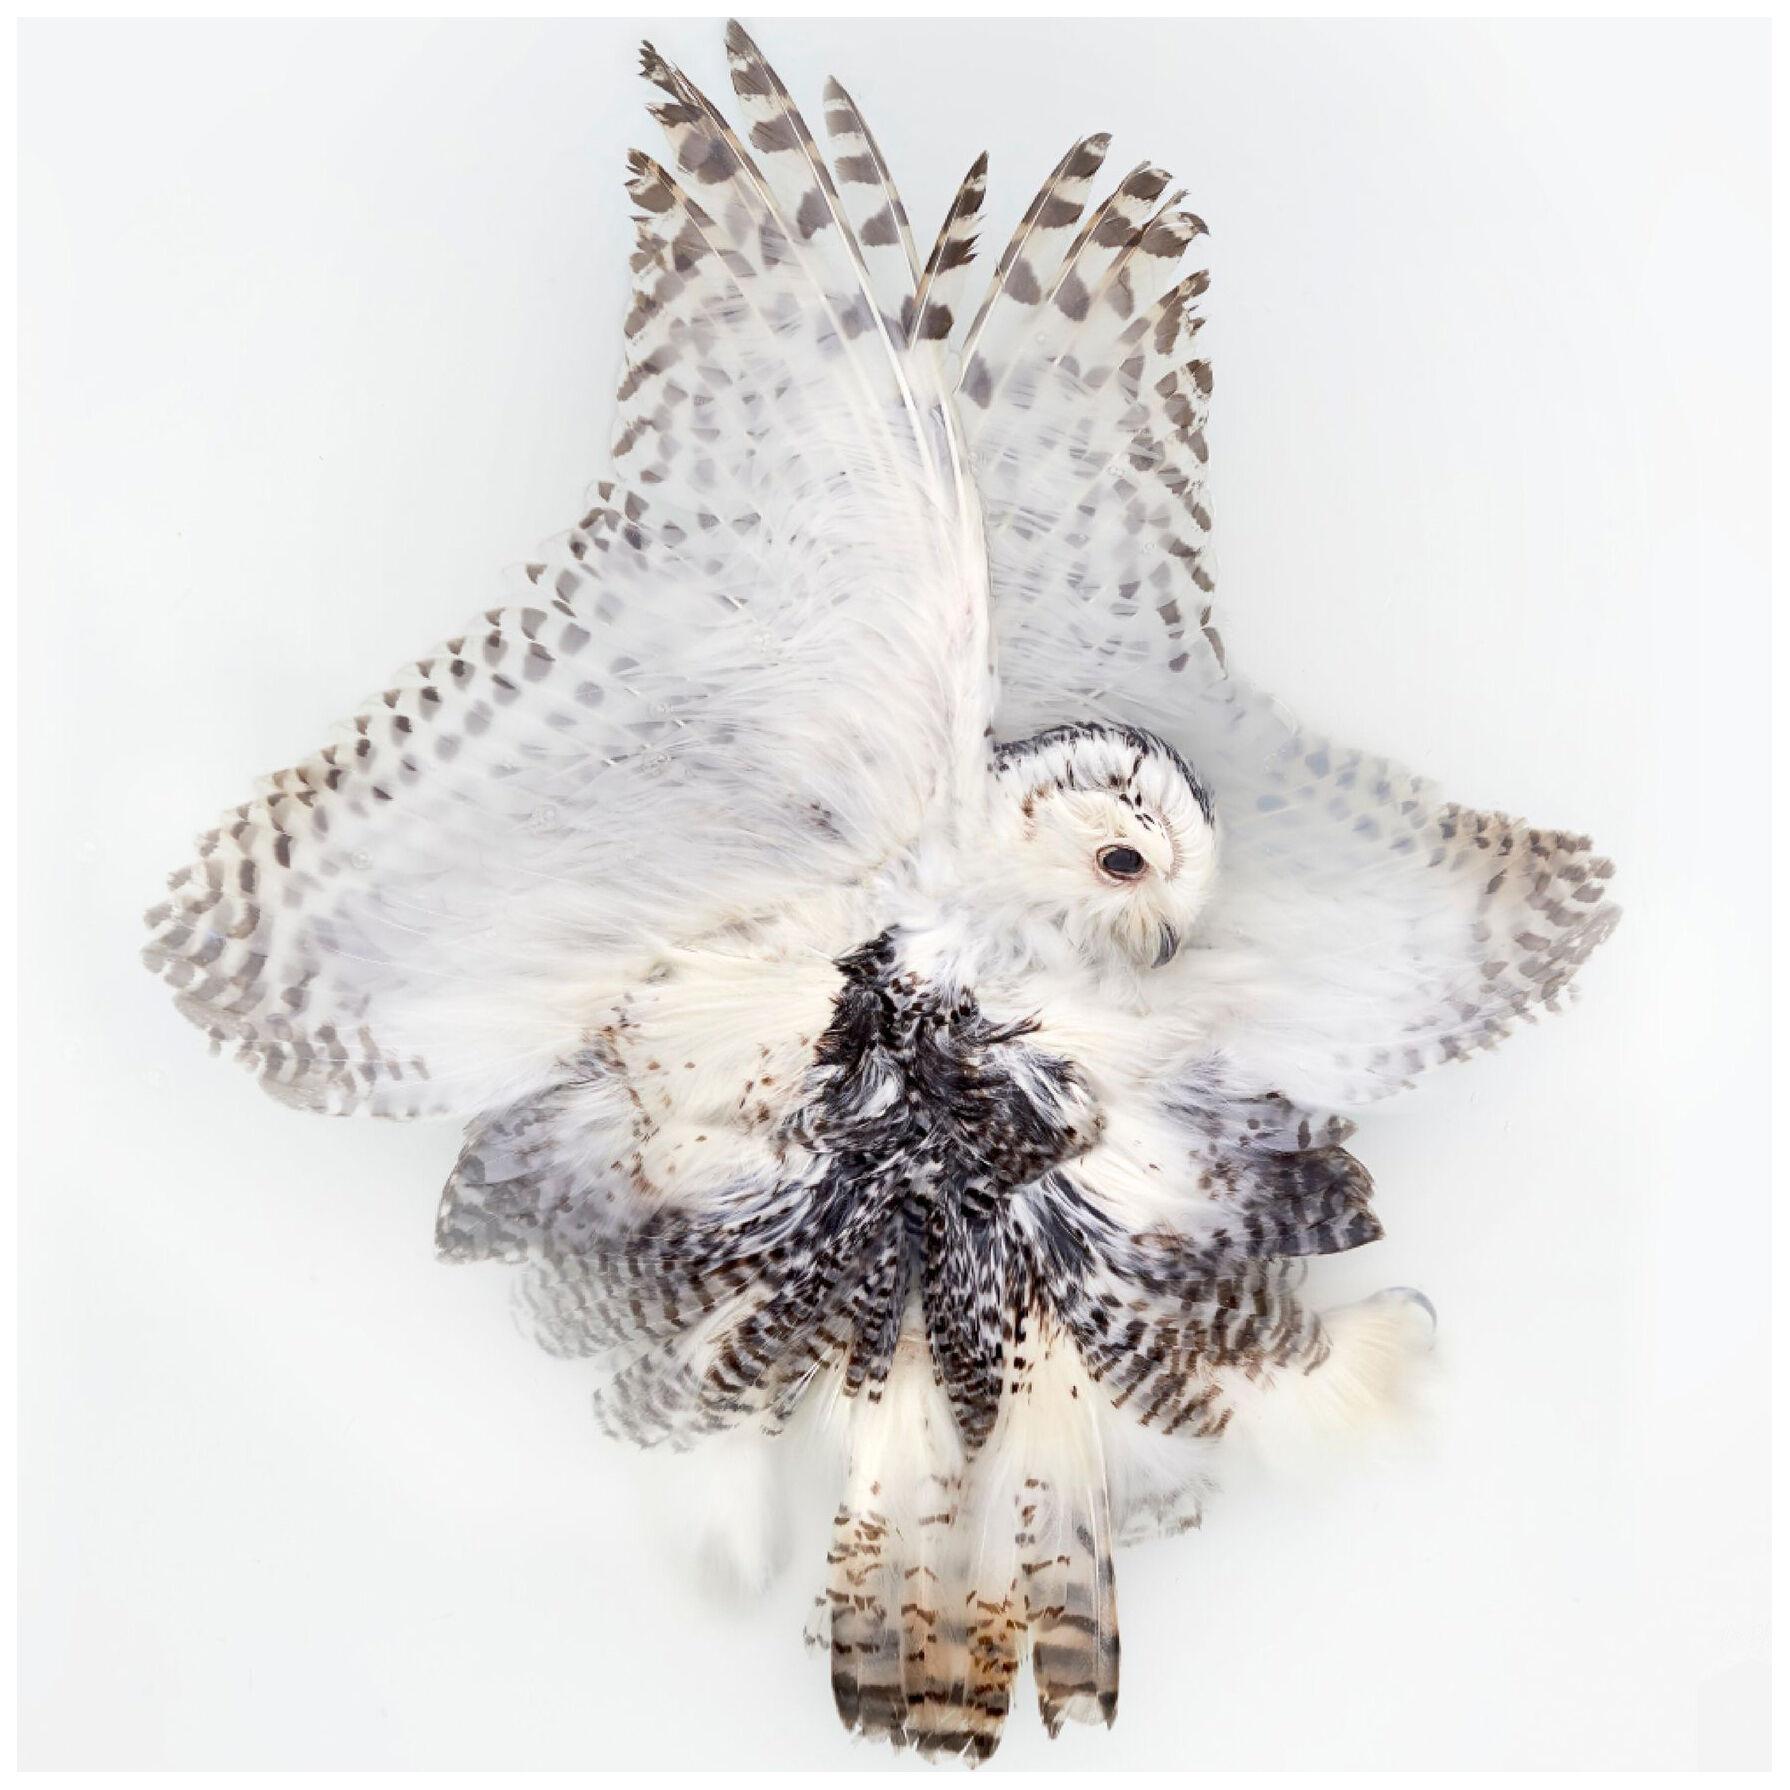 Art Print 'Unkown Pose by Snowy Owl' by Sinke & Van Tongeren 160x160 cm